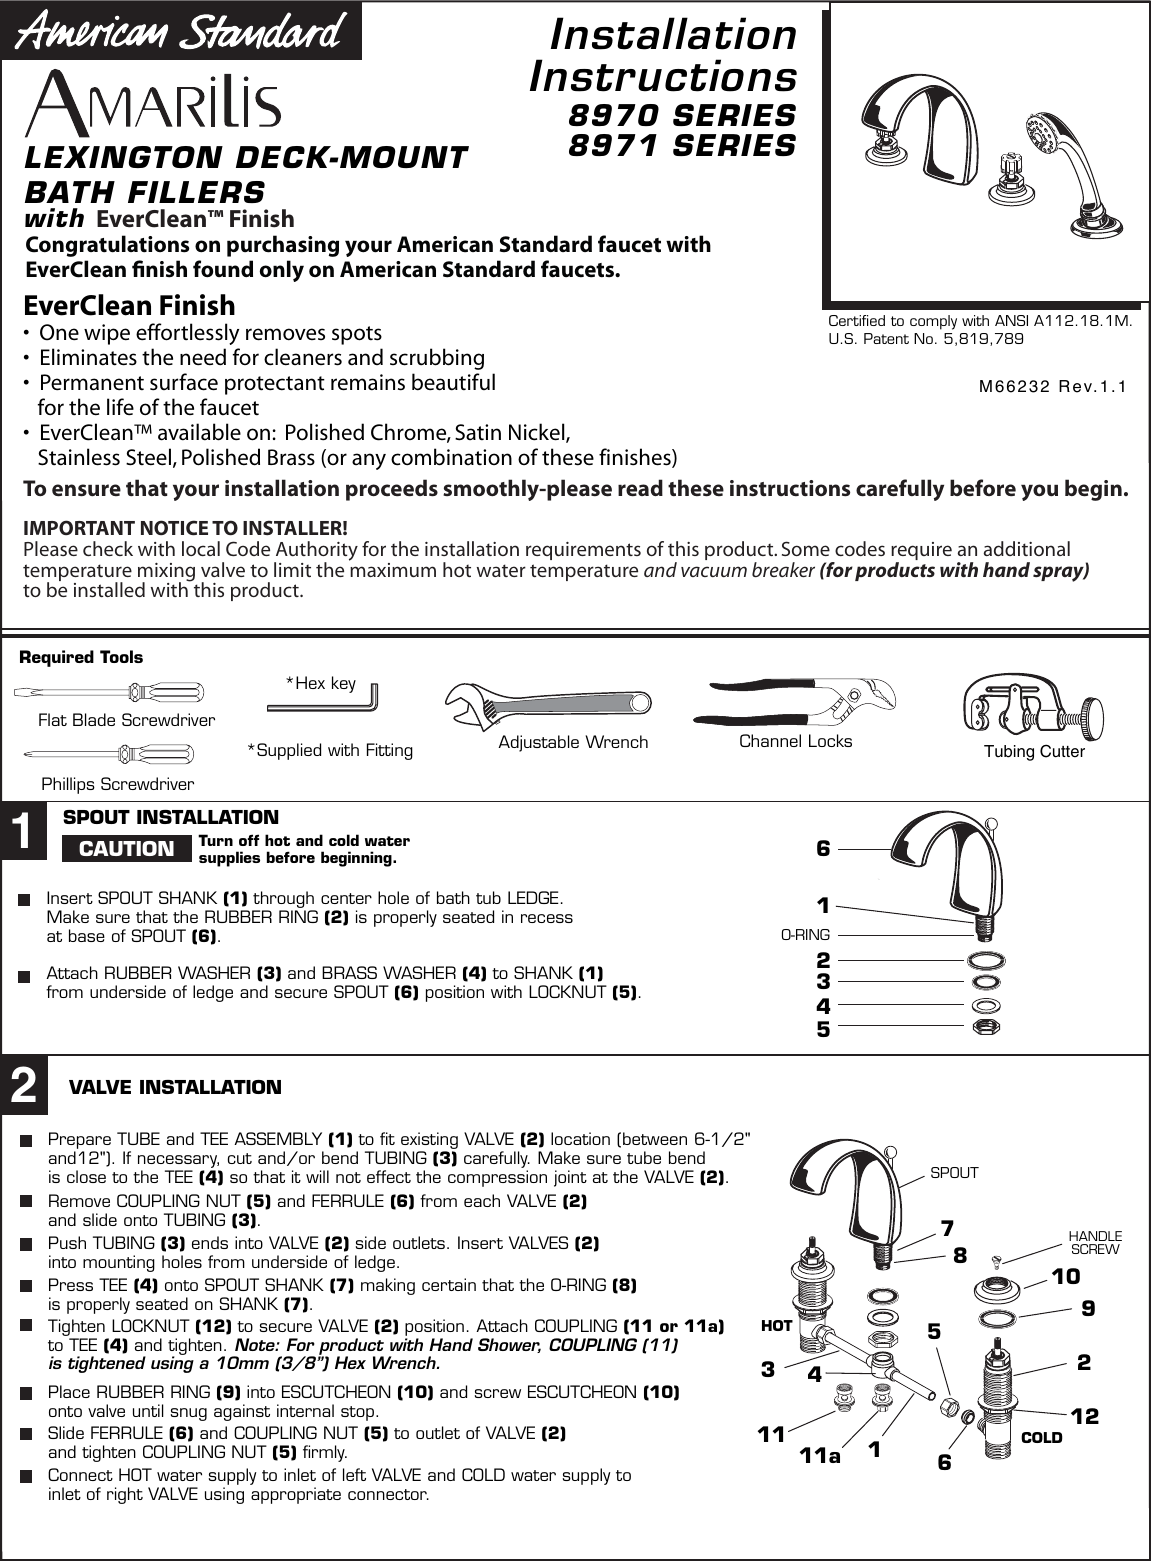 Page 1 of 2 - American-Standard American-Standard-Amarilis-Lexington-Bath-Filler-8971-Series-Users-Manual- Lexington_8970_8971  American-standard-amarilis-lexington-bath-filler-8971-series-users-manual